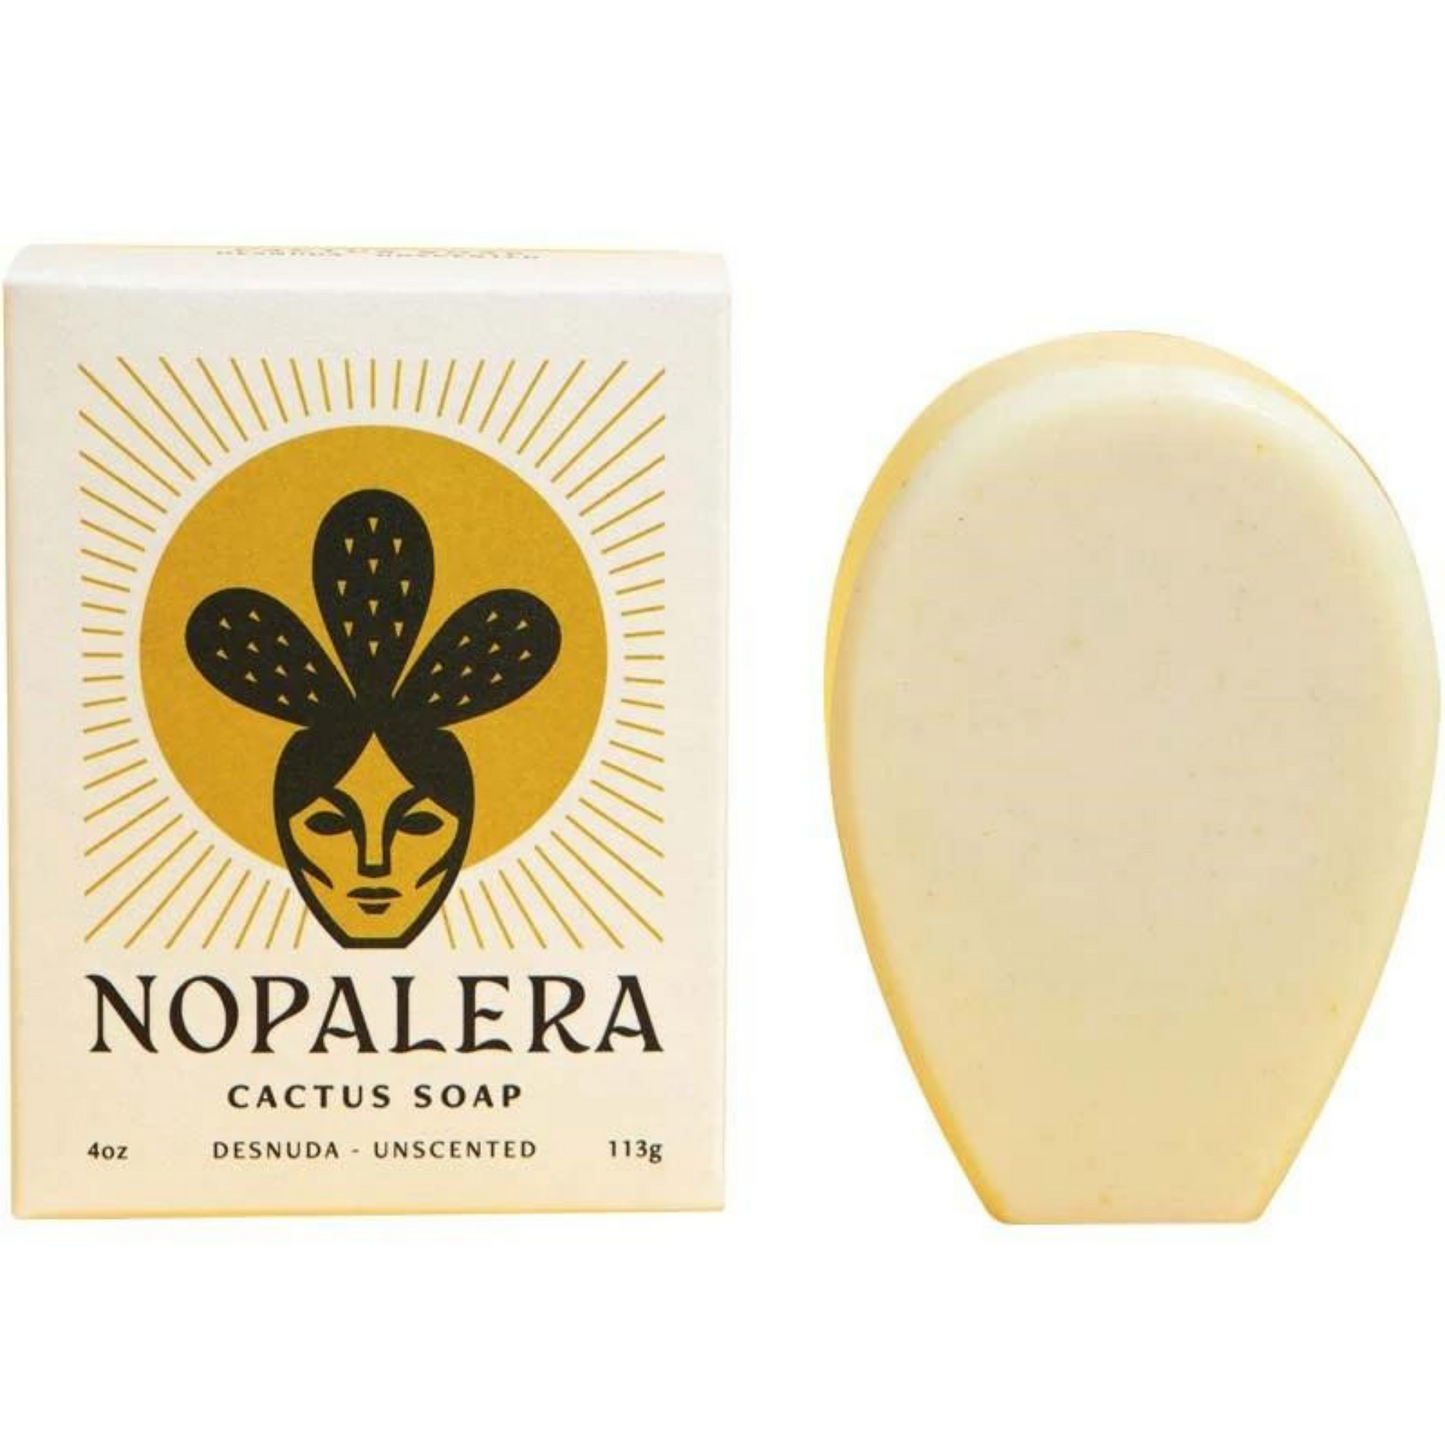 Primary Image of Nopalera Desnuda (Unscented) Cactus Soap